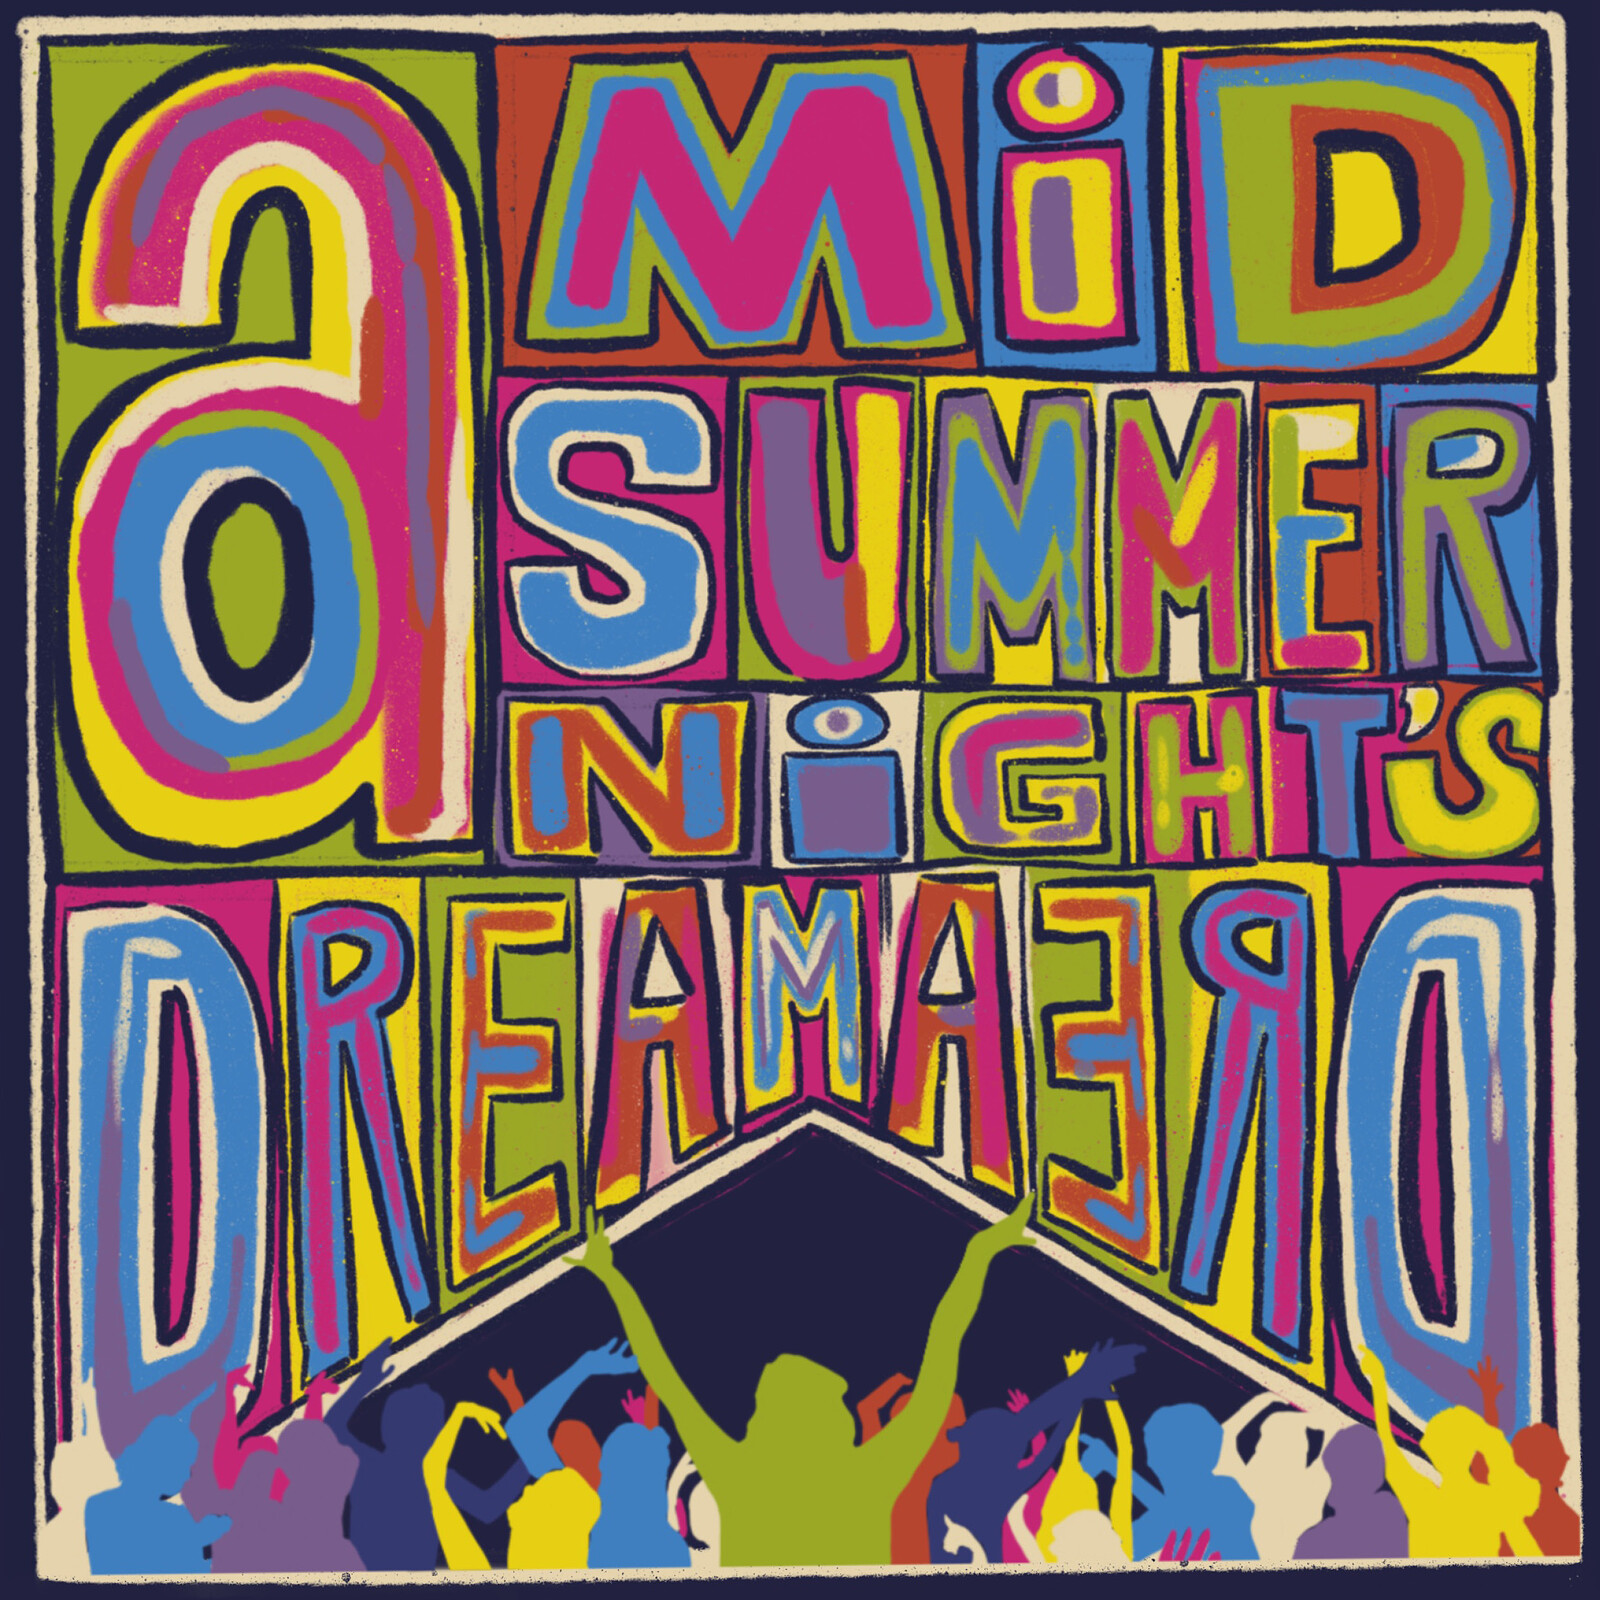 A Midsummer Night's Dream at The Loco Klub